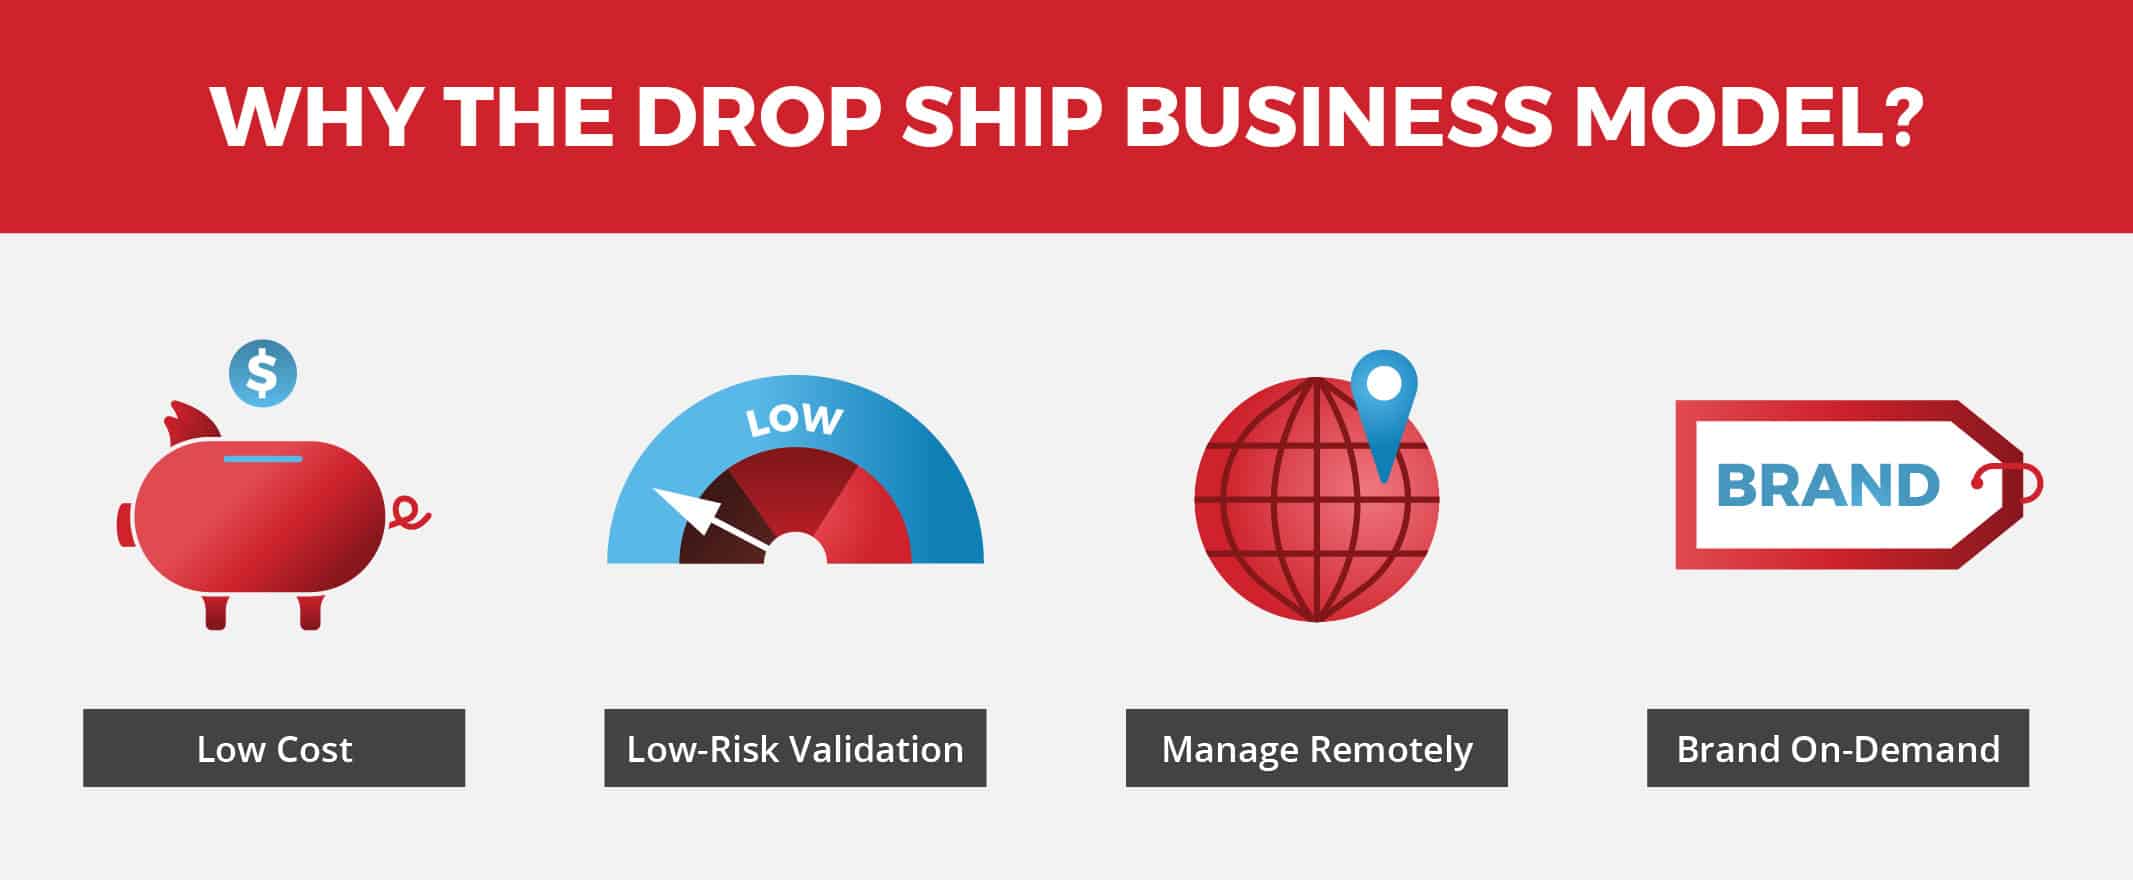 Drop ship business model